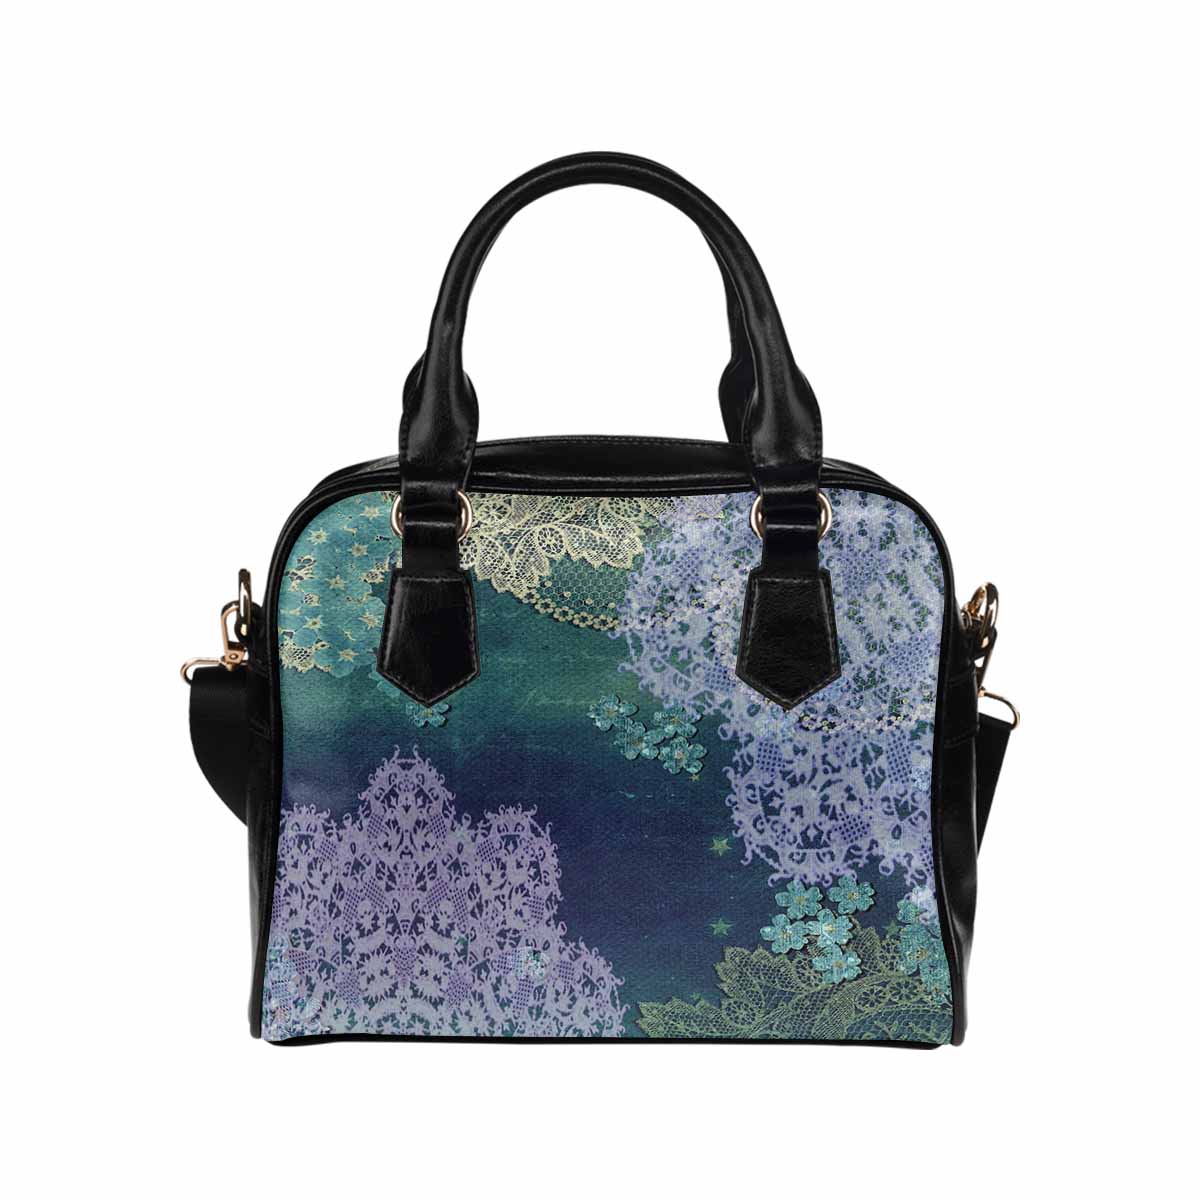 Victorian lace print, cute handbag, Mod 19163453, design 05